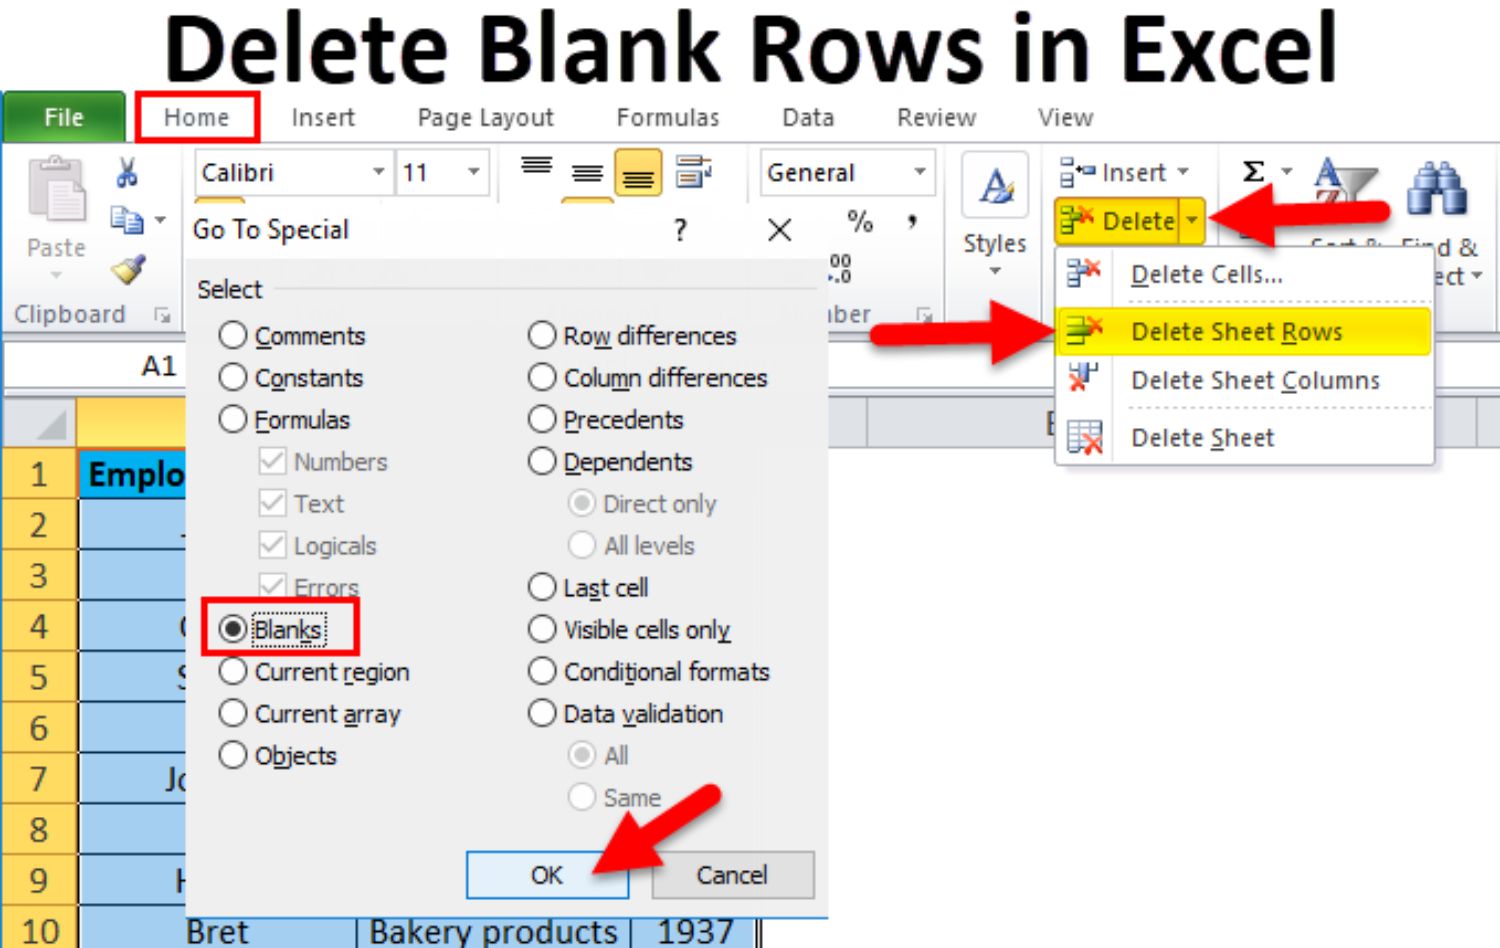 Delete-Blank-Rows-in-Excel